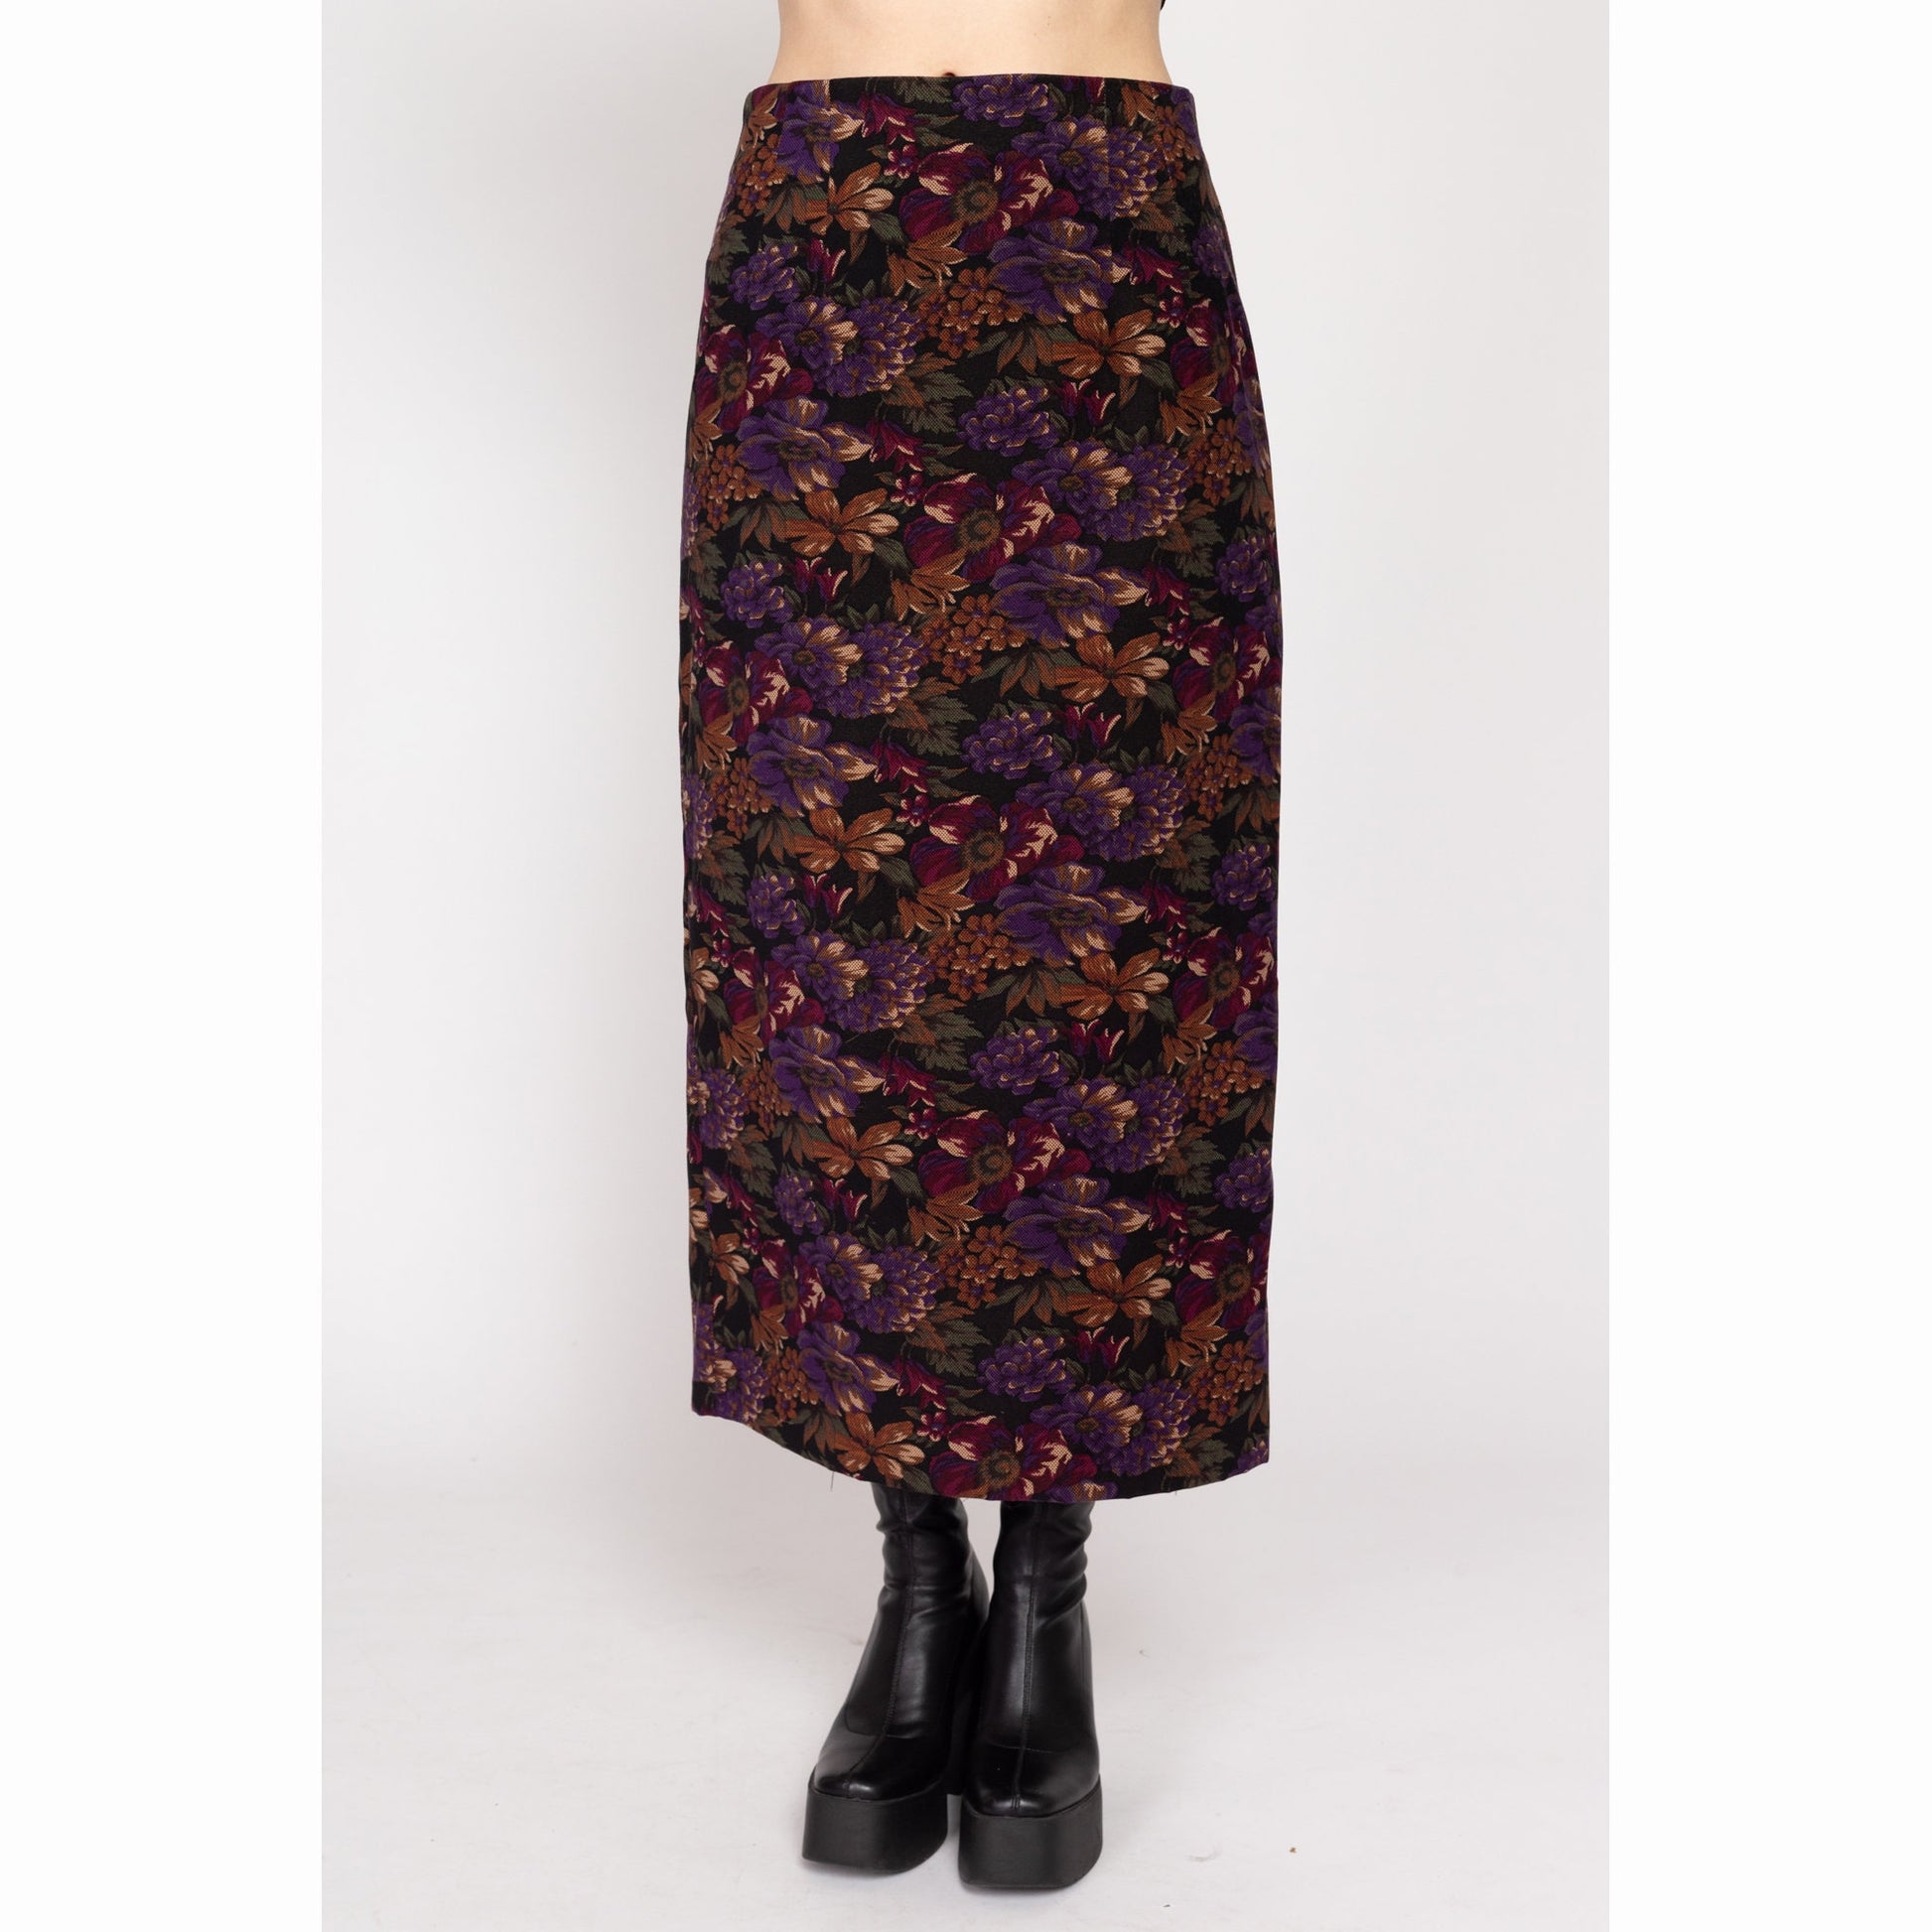 Medium 90s Dark Floral Tapestry Maxi Skirt 28" | Vintage High Waisted Boho Grunge Skirt